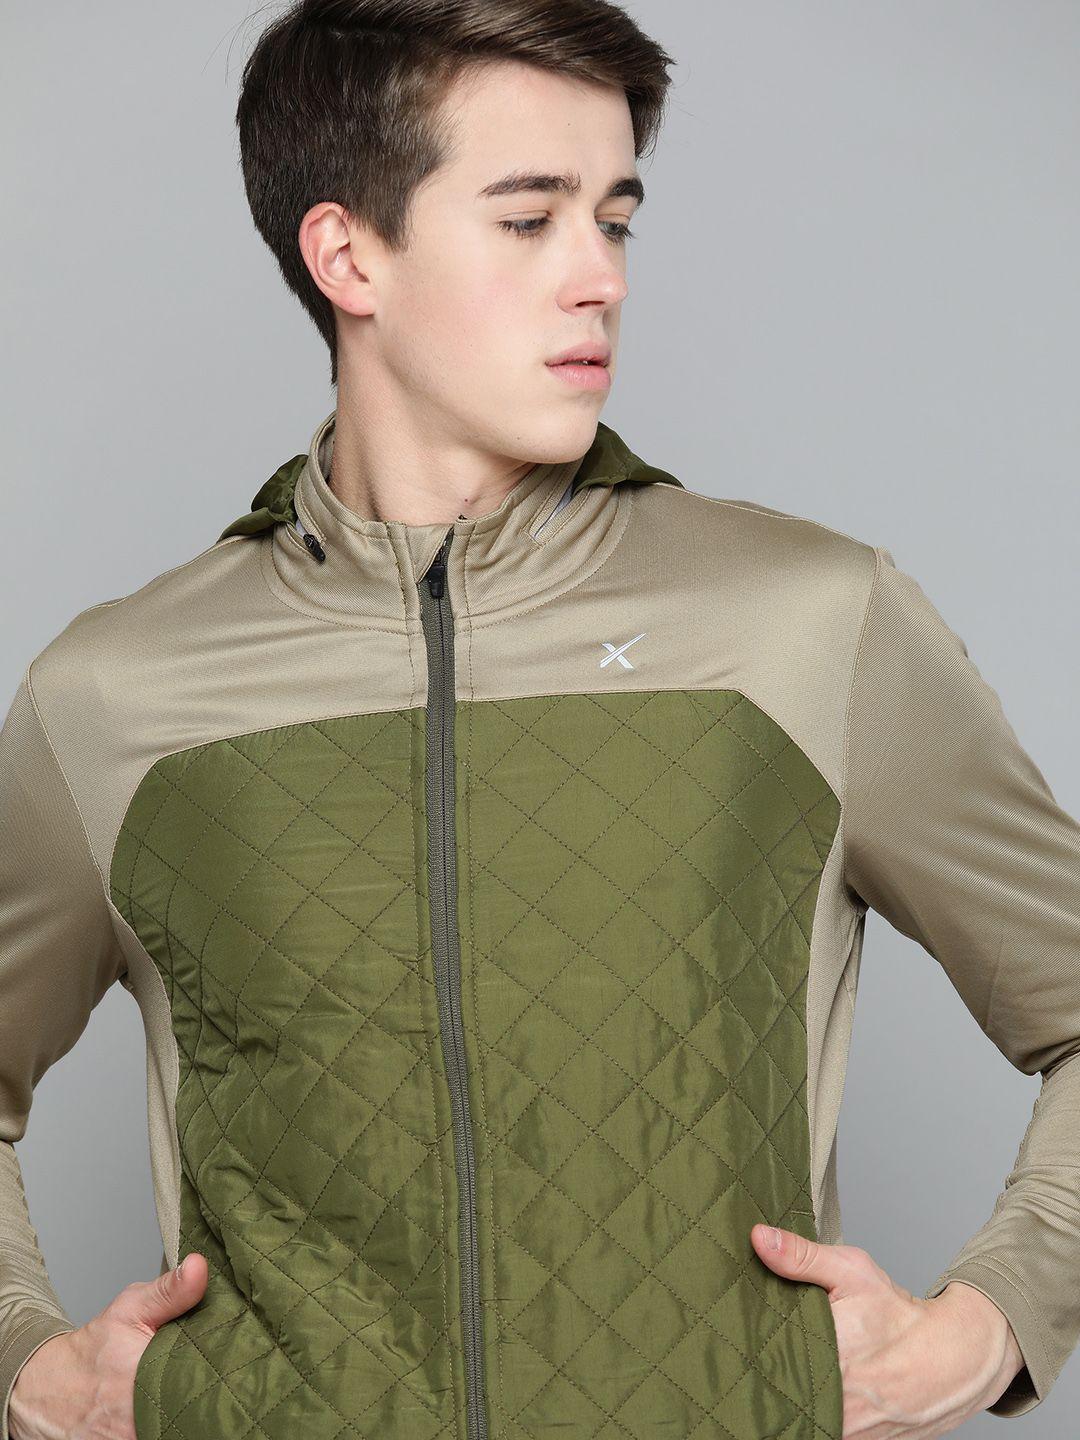 hrx by hrithik roshan outdoor men rapid-dry jacket